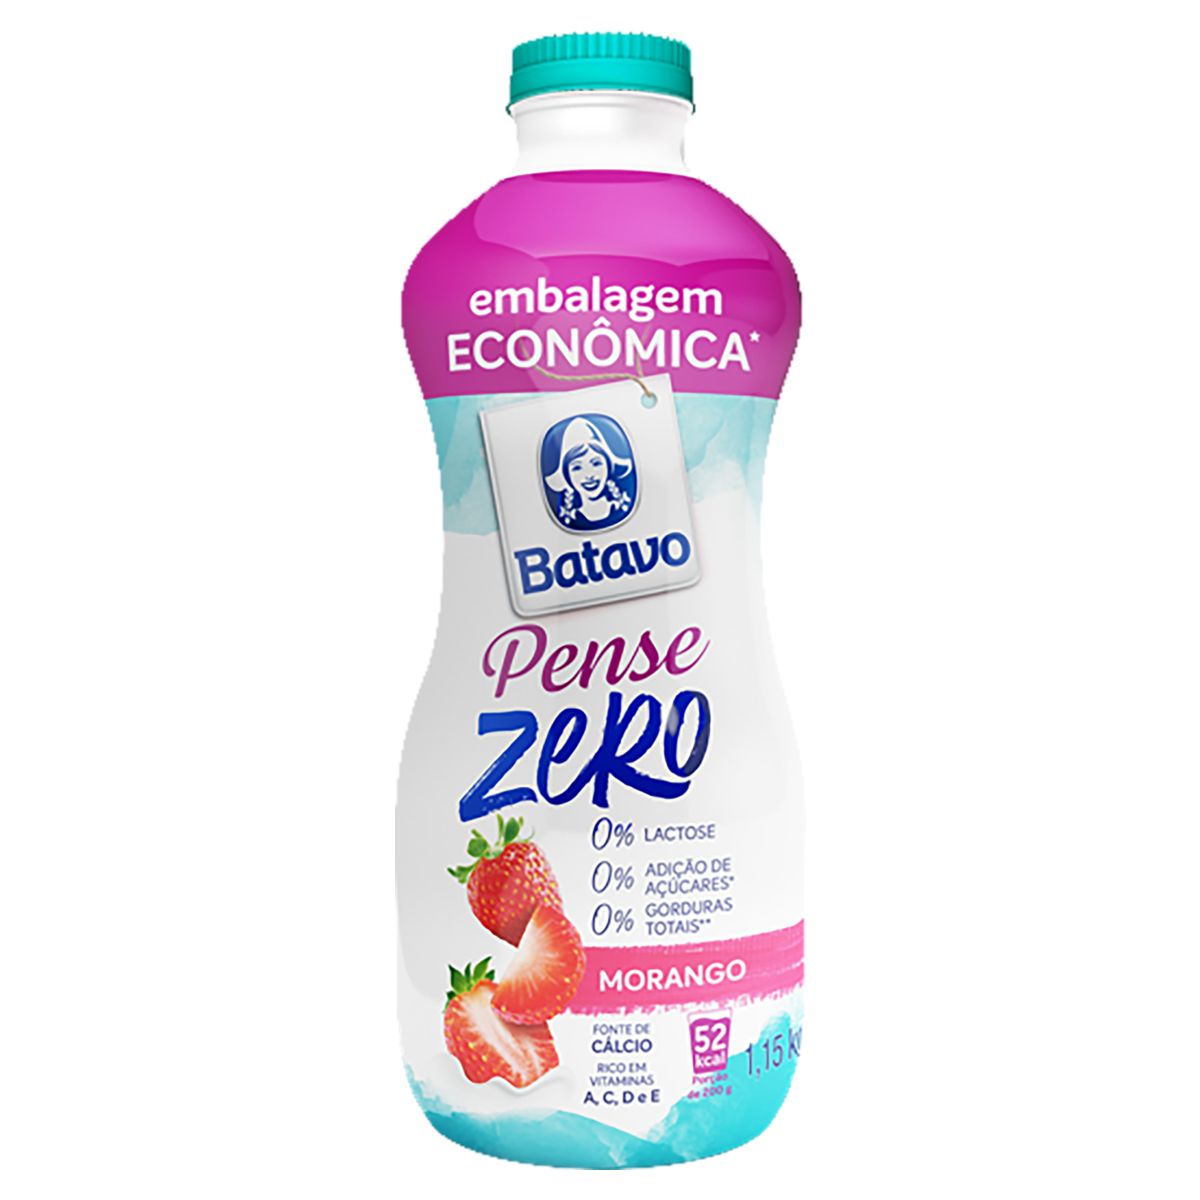 Iogurte Batavo Pense Morango Zero 1,15kg Embalagem Econômica image number 0